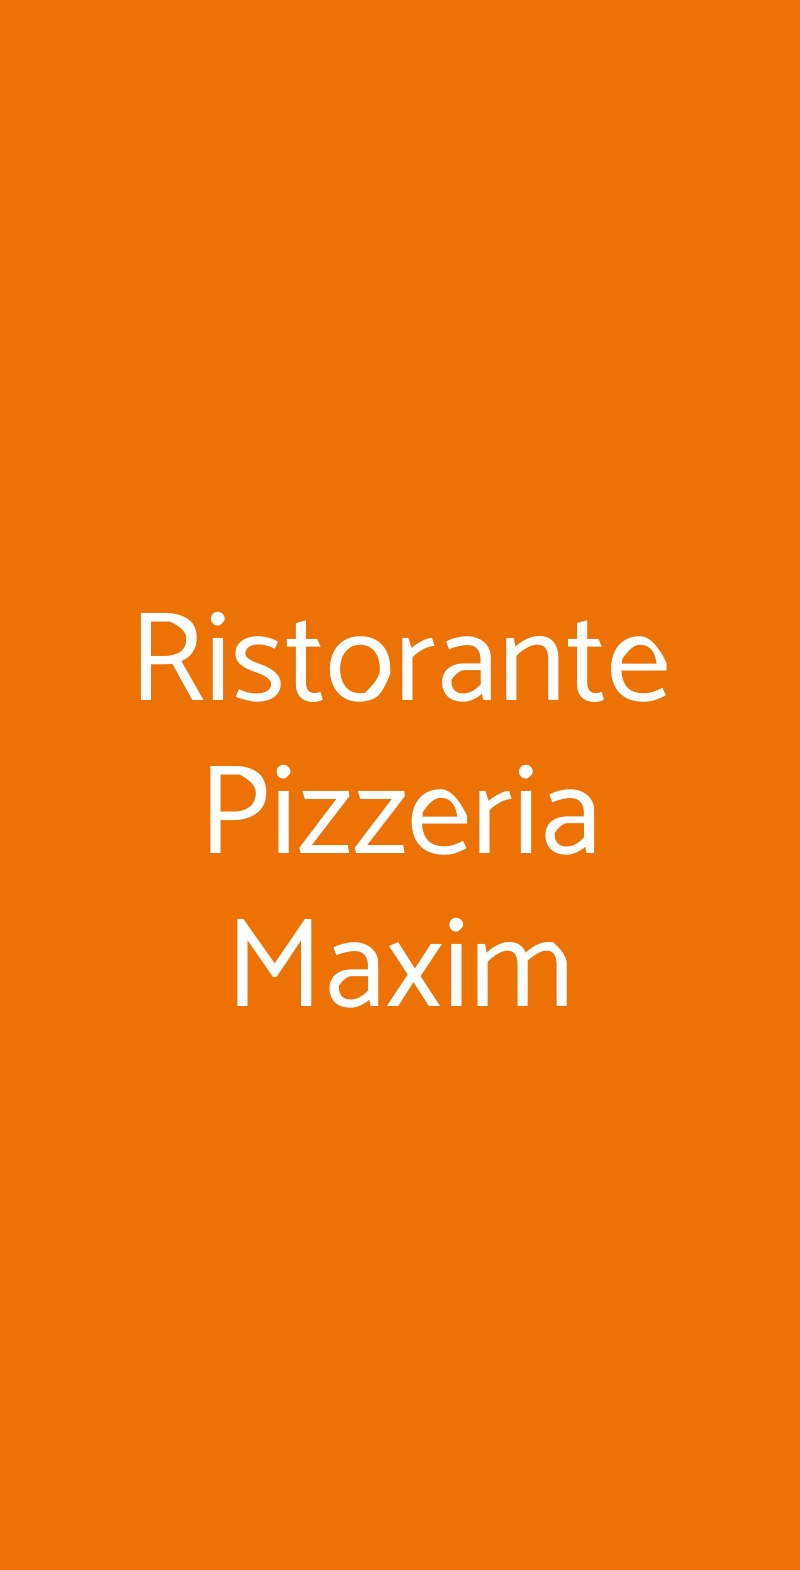 Ristorante Pizzeria Maxim Padova menù 1 pagina